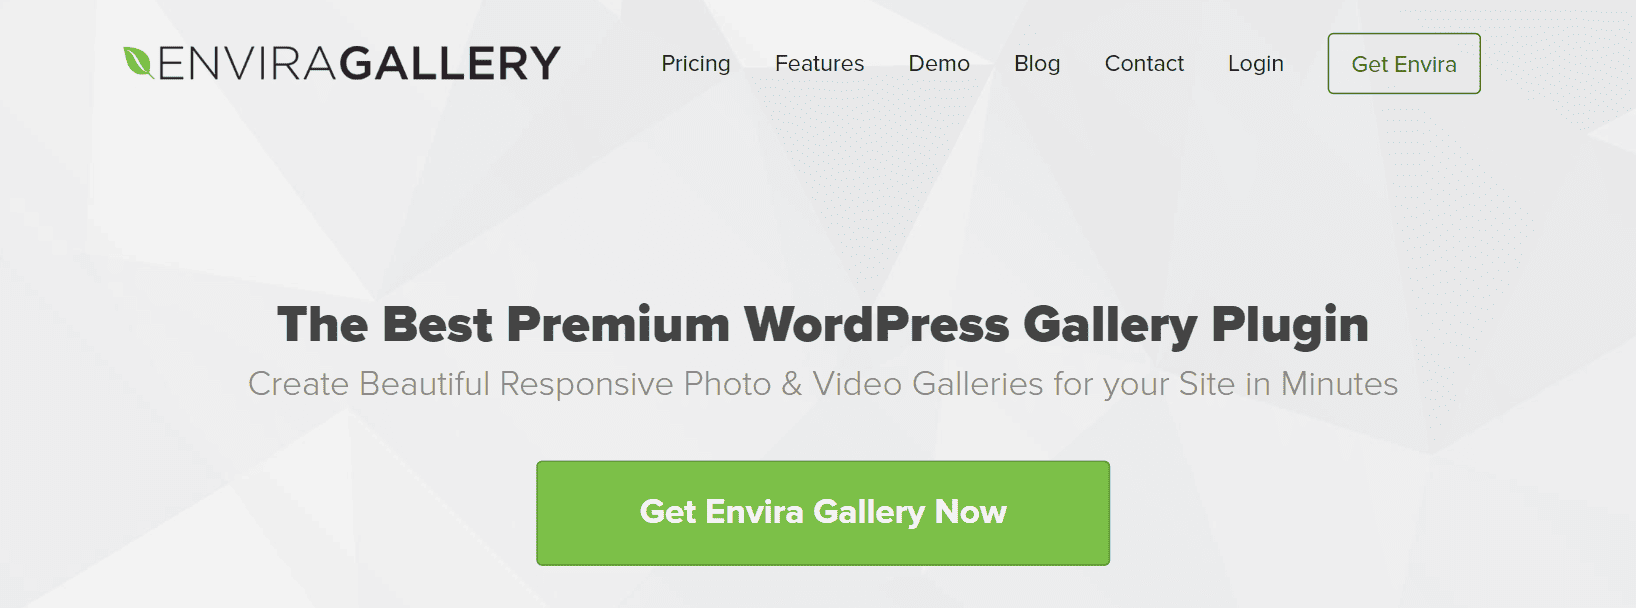 Envira Gallery Landing Page